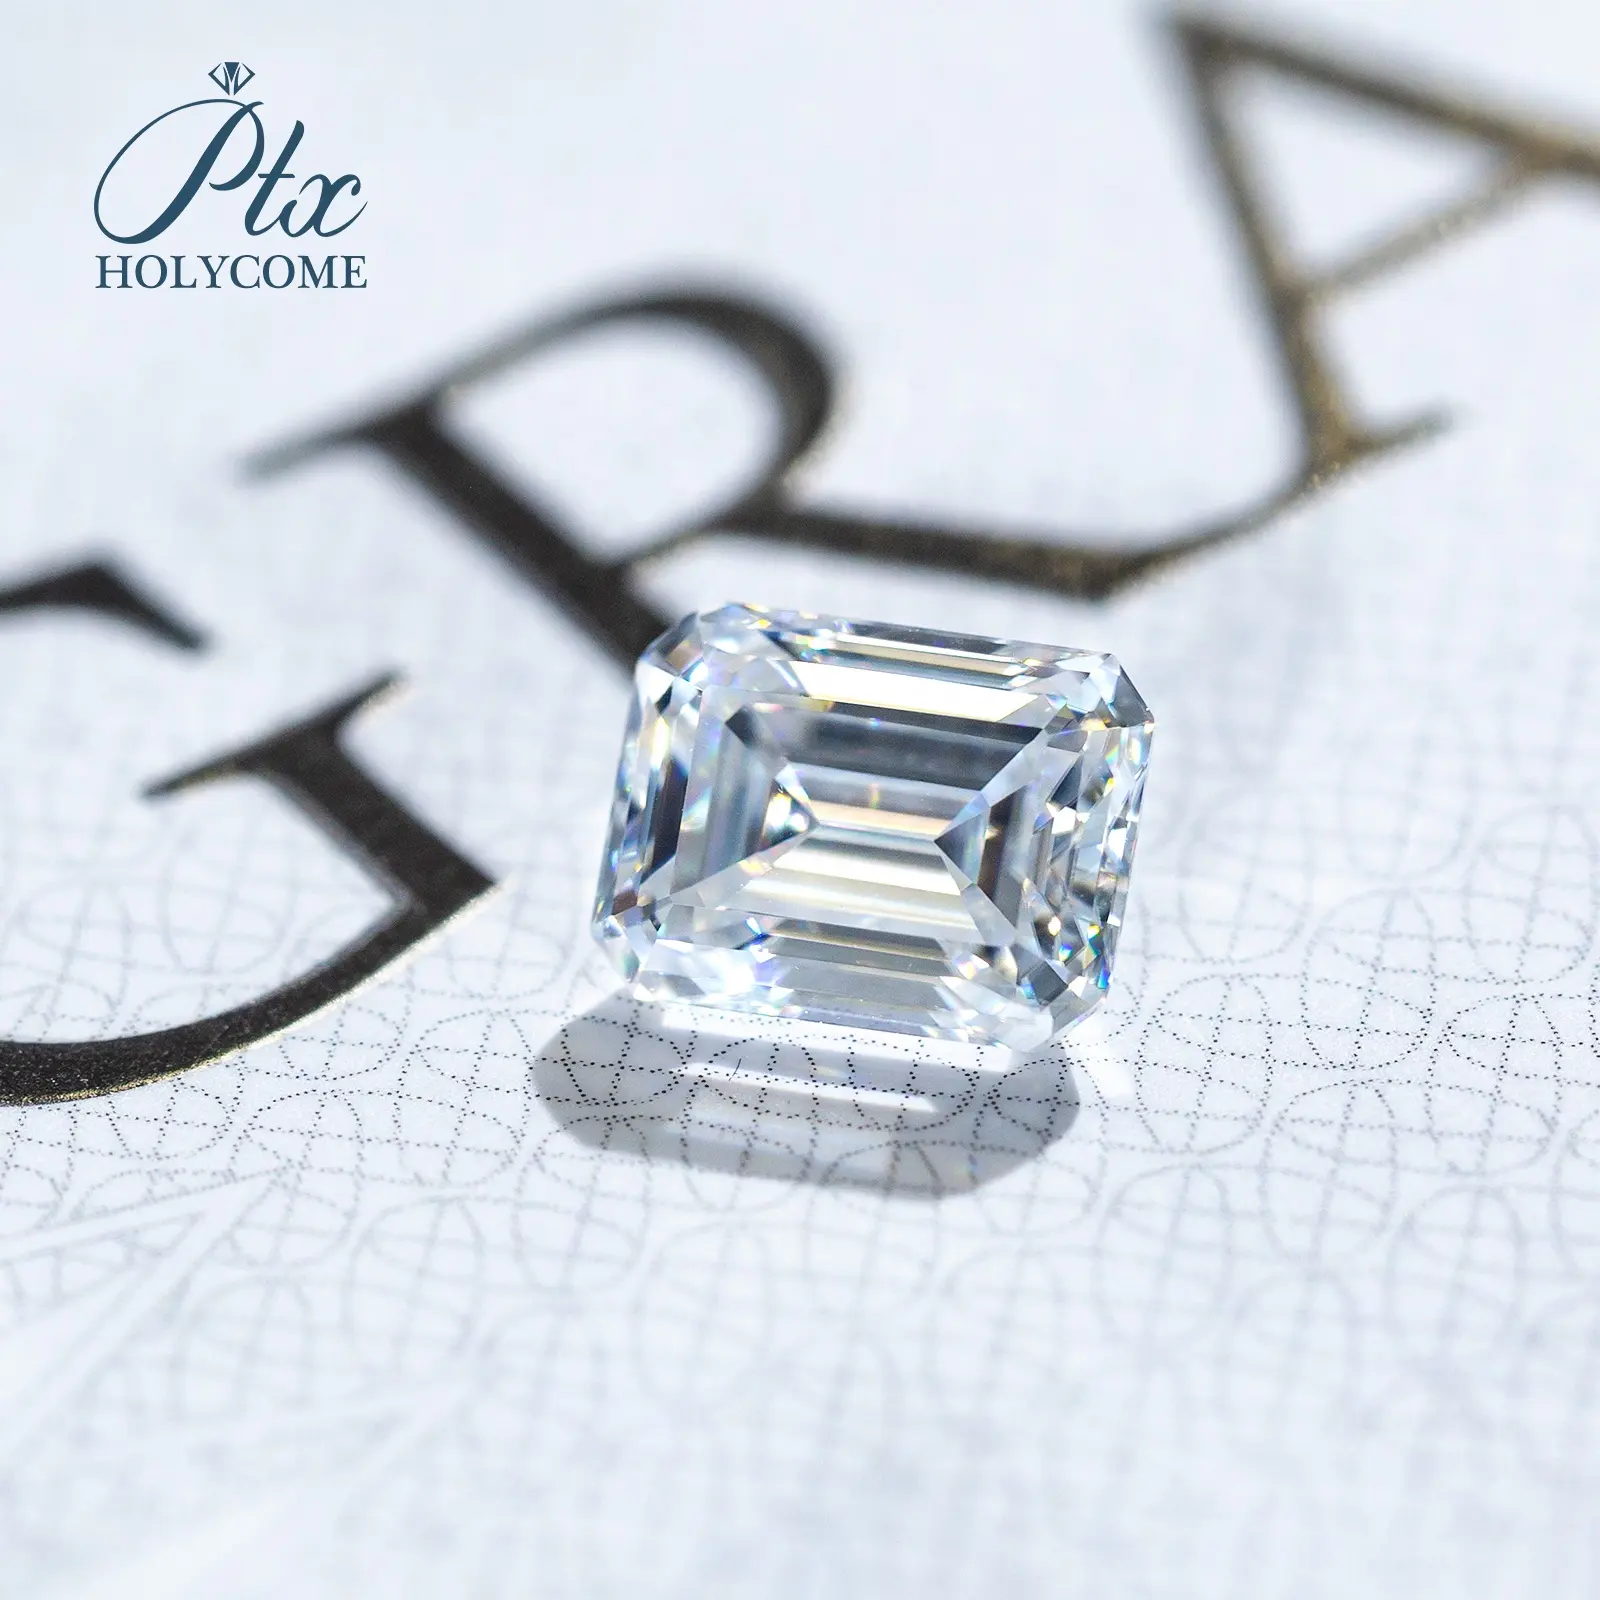 BEST quality D color vvs emerald cut moissanite diamonds with GRA Certificate octagon step cut moissanite loose gemstones